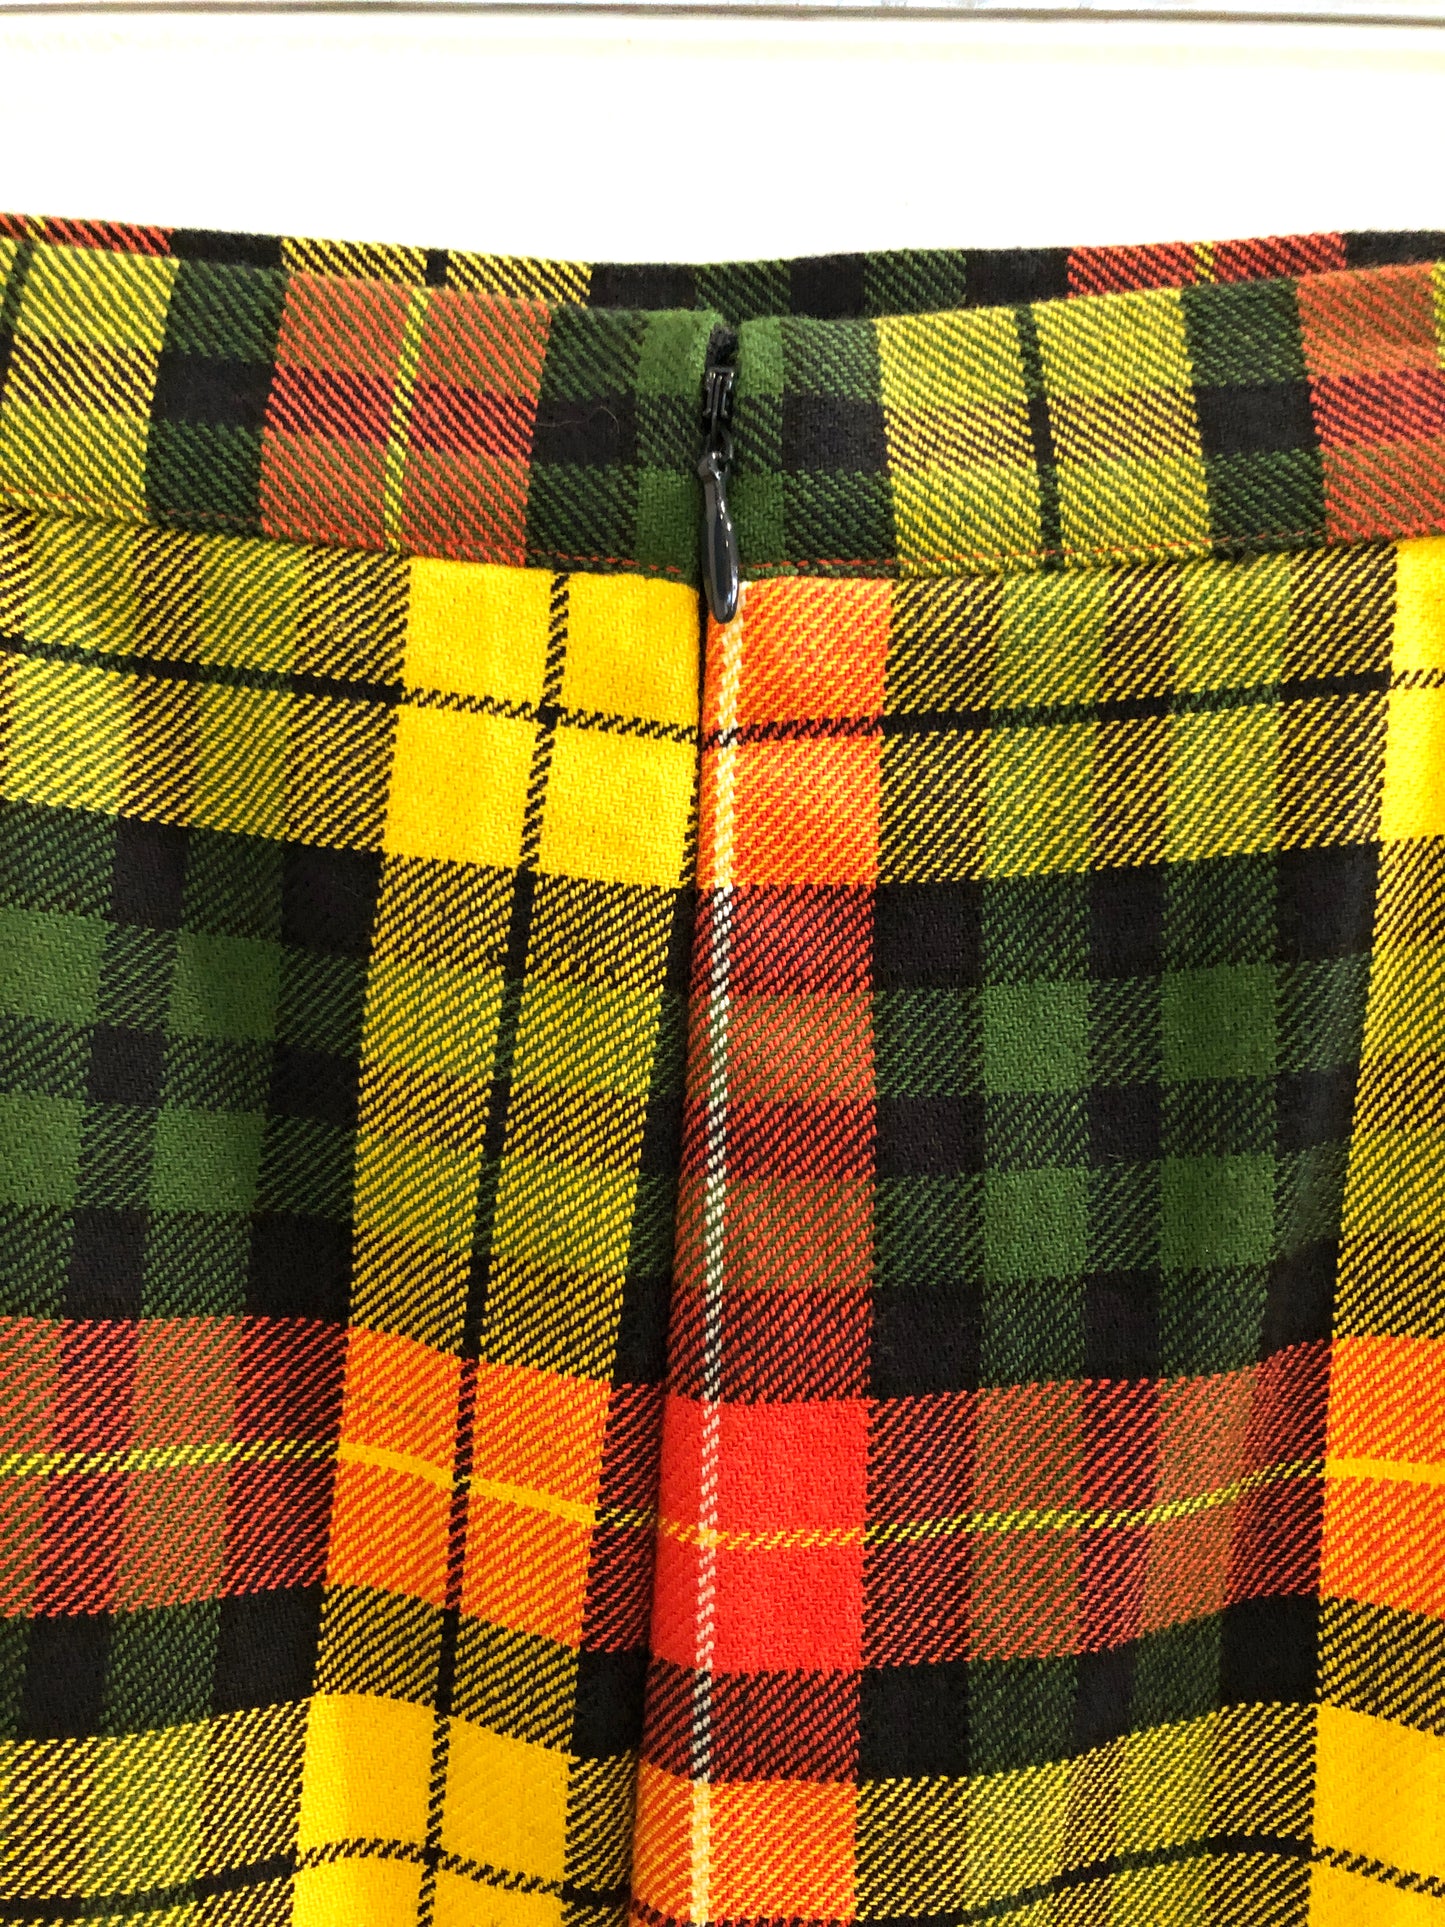 Liz Claiborne Plaid Yellow Mini Skirt